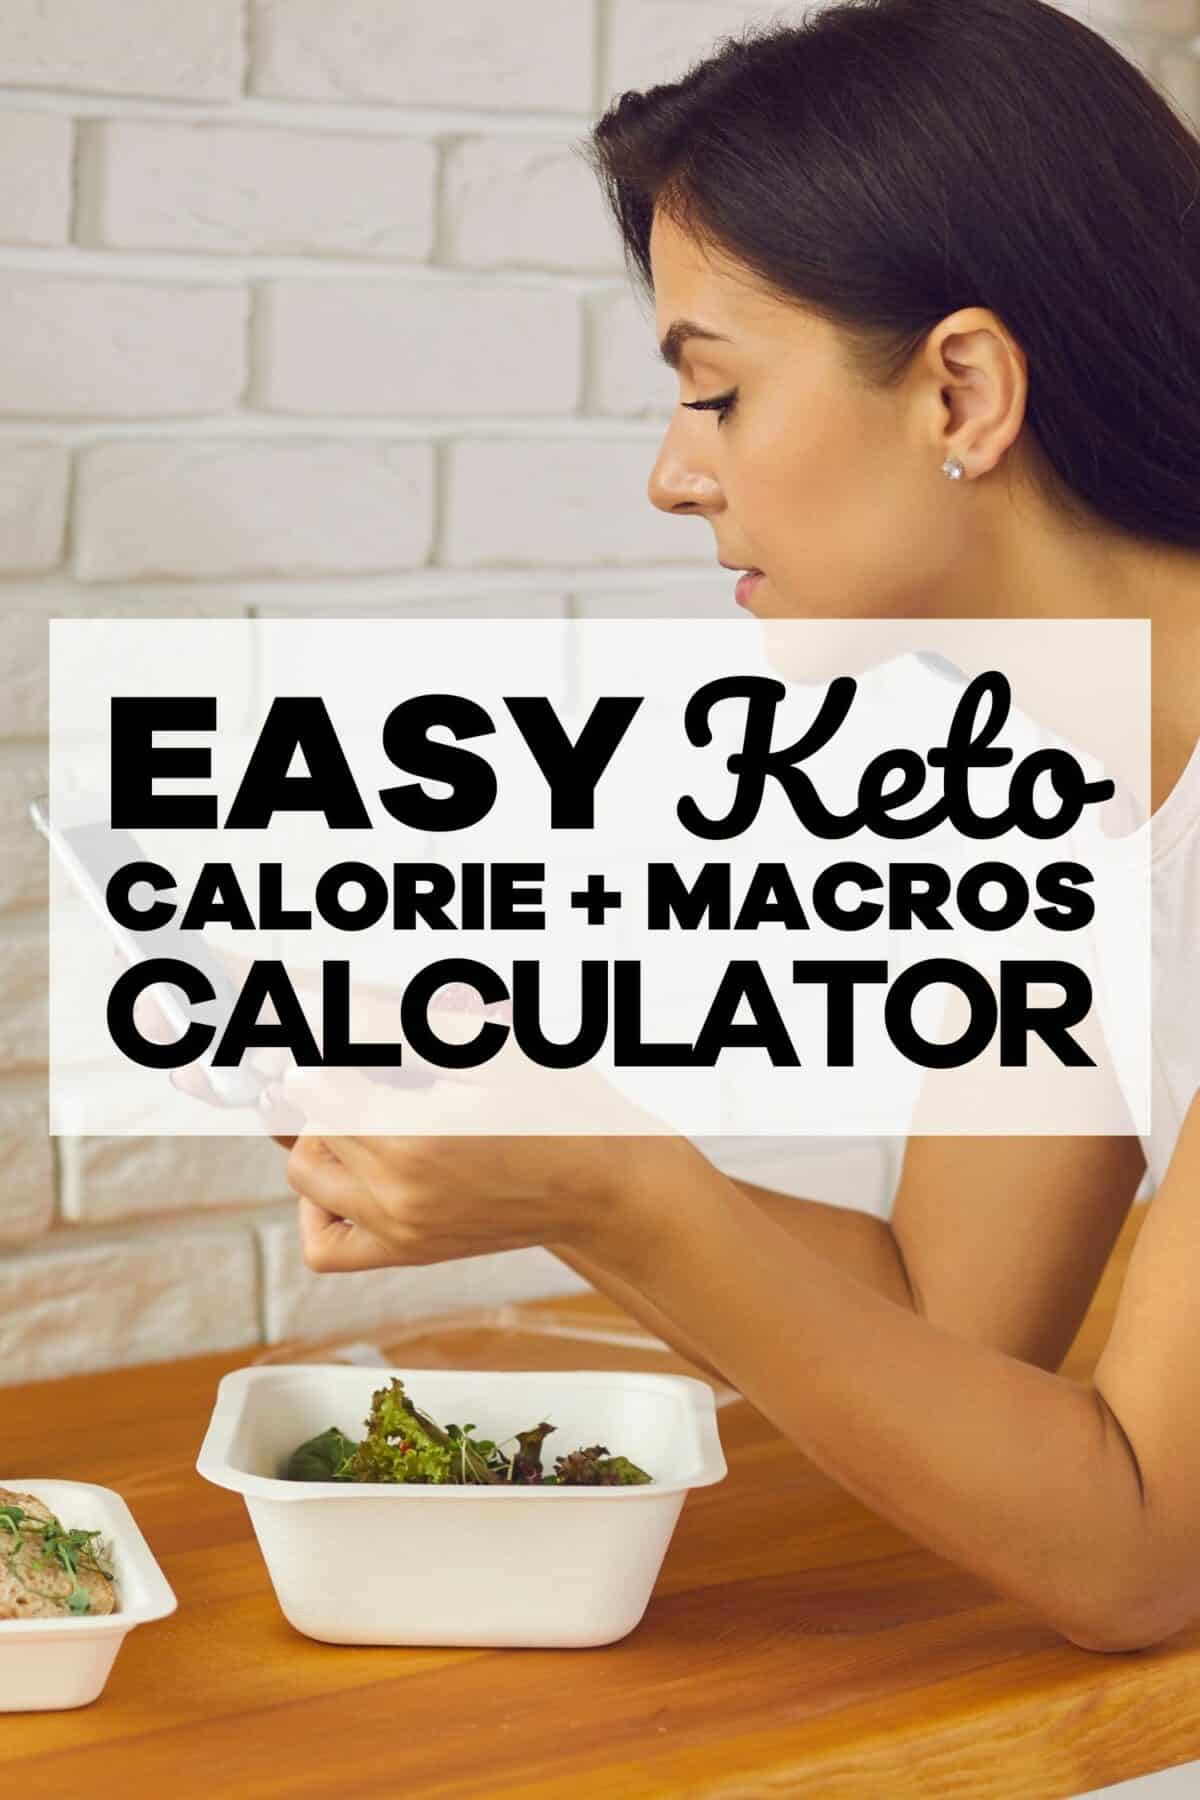 Easy Keto Calorie and Macros Calculator